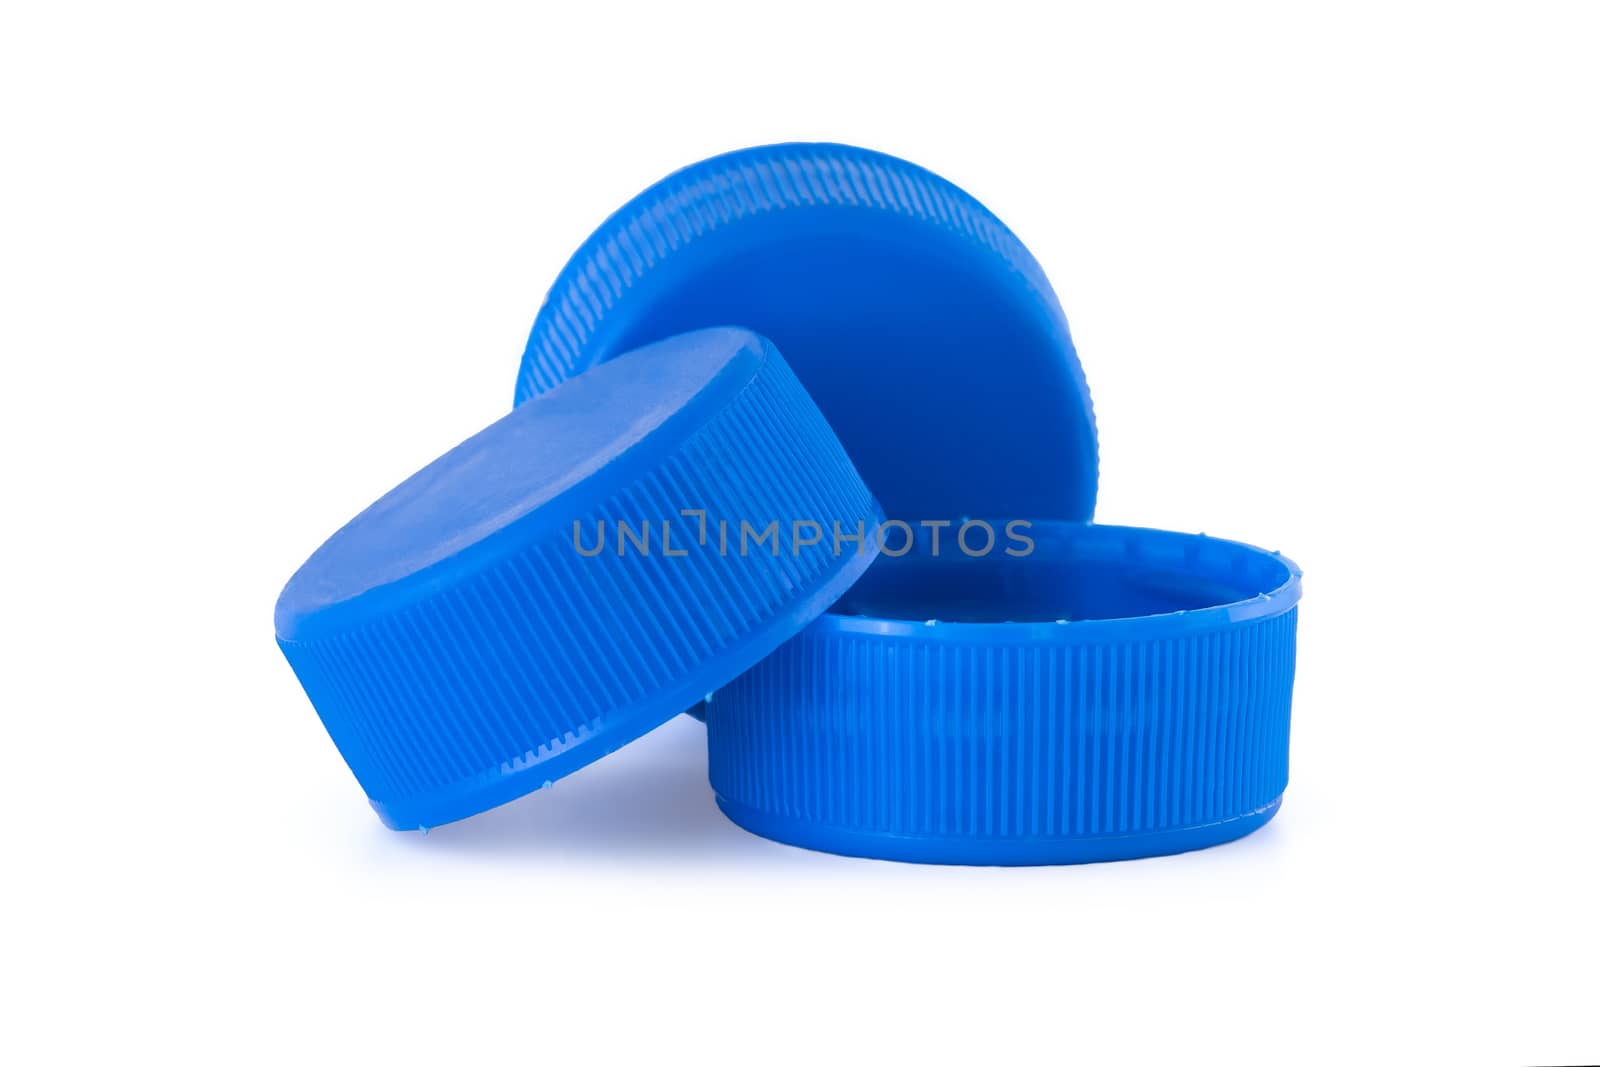 Three blue plastic bottle caps by Gbuglok